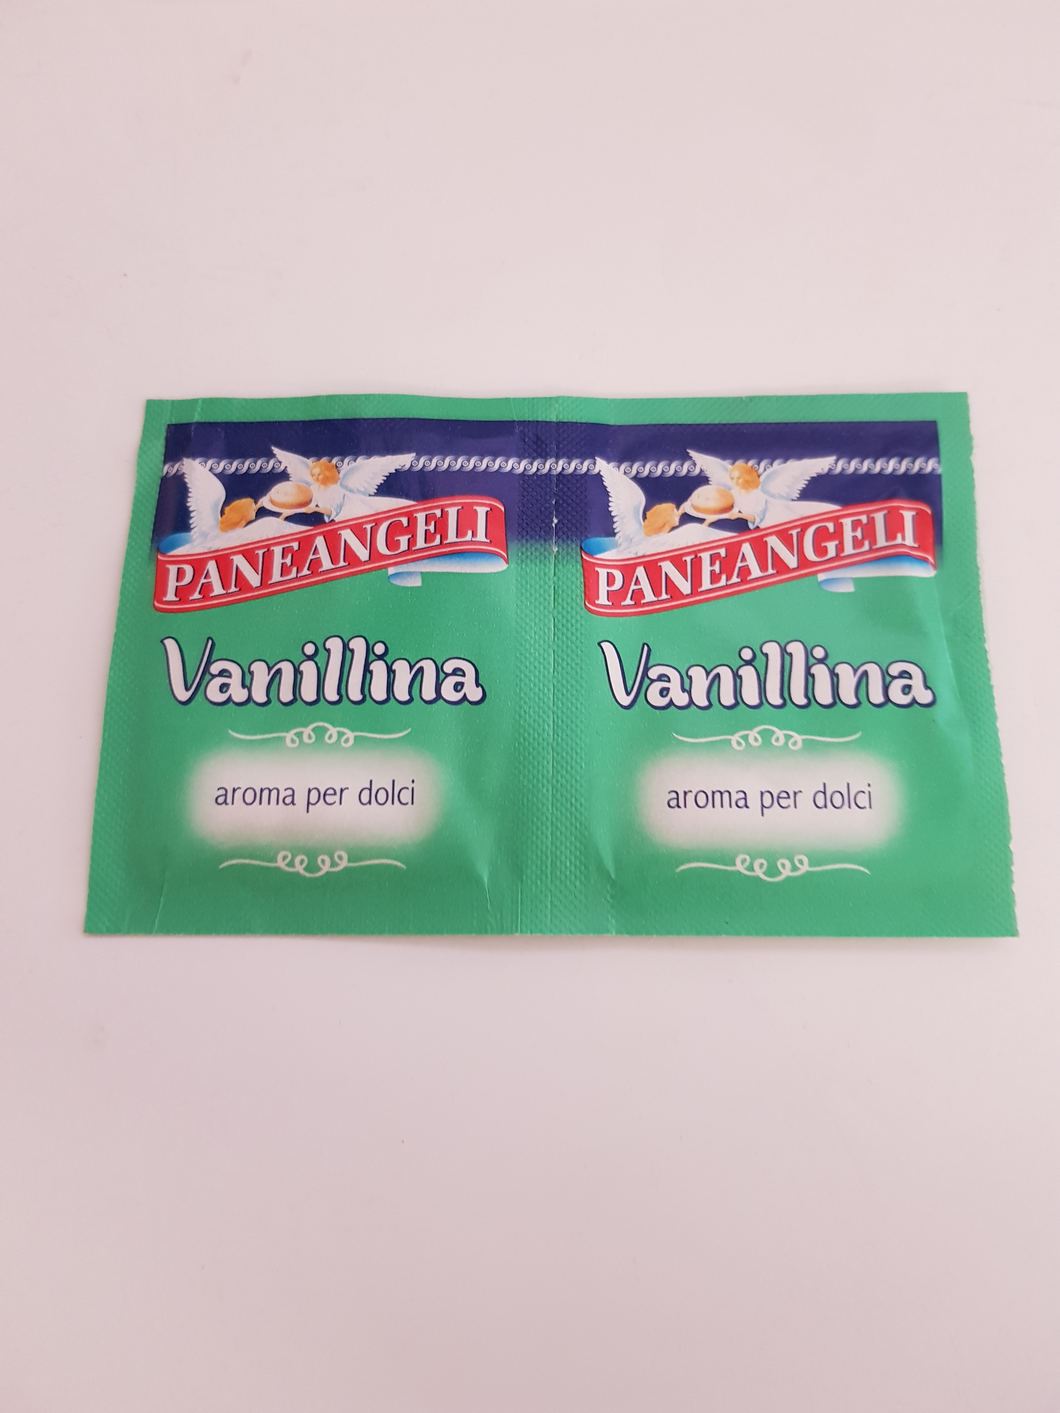 Paneangeli - Vanillina (Vanilla Powder)